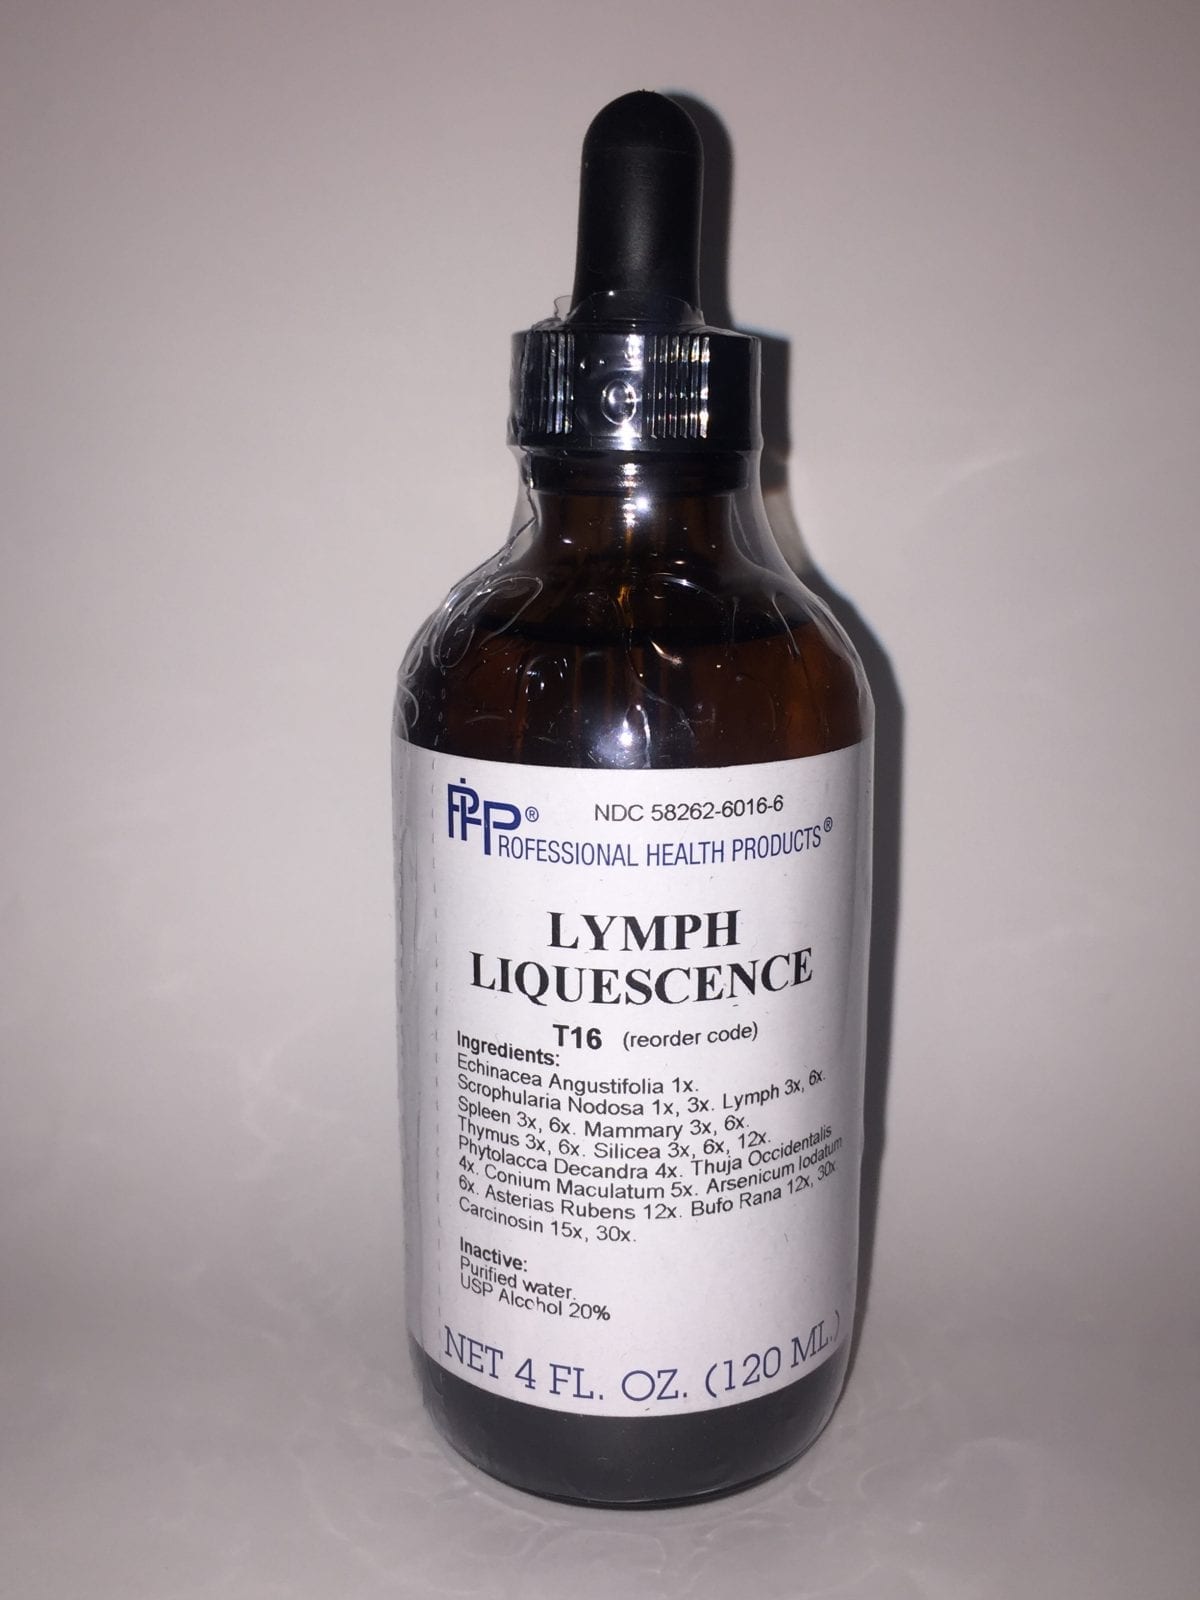 Lymph liquescence label